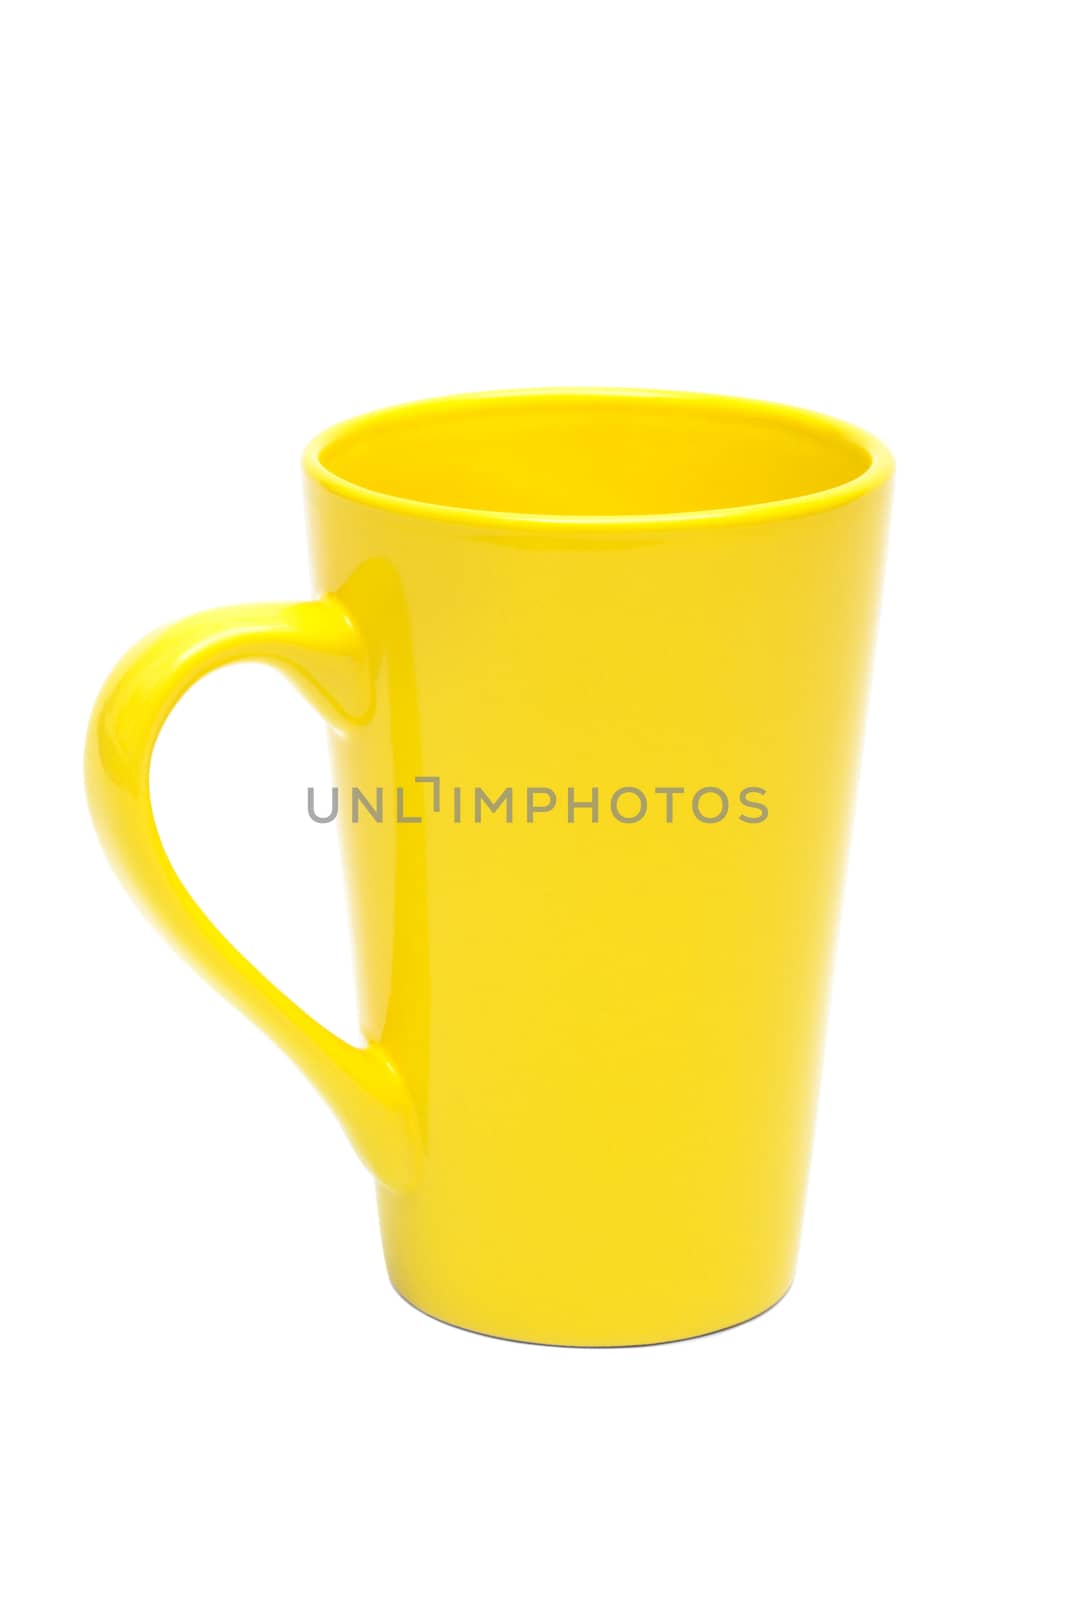 yellow mug by terex